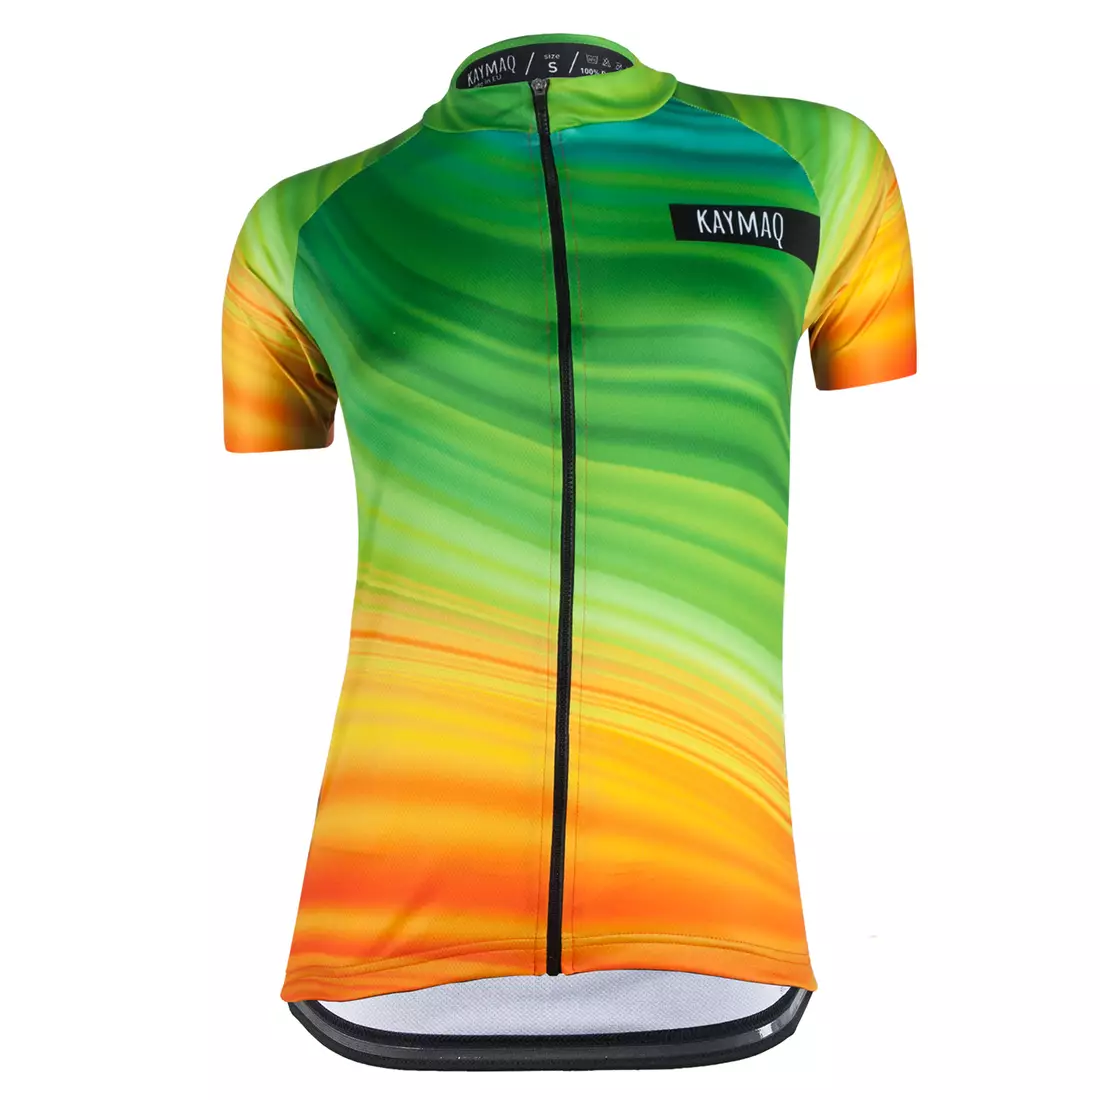 KAYMAQ DESIGN W18 Women's cycling short sleeve jersey